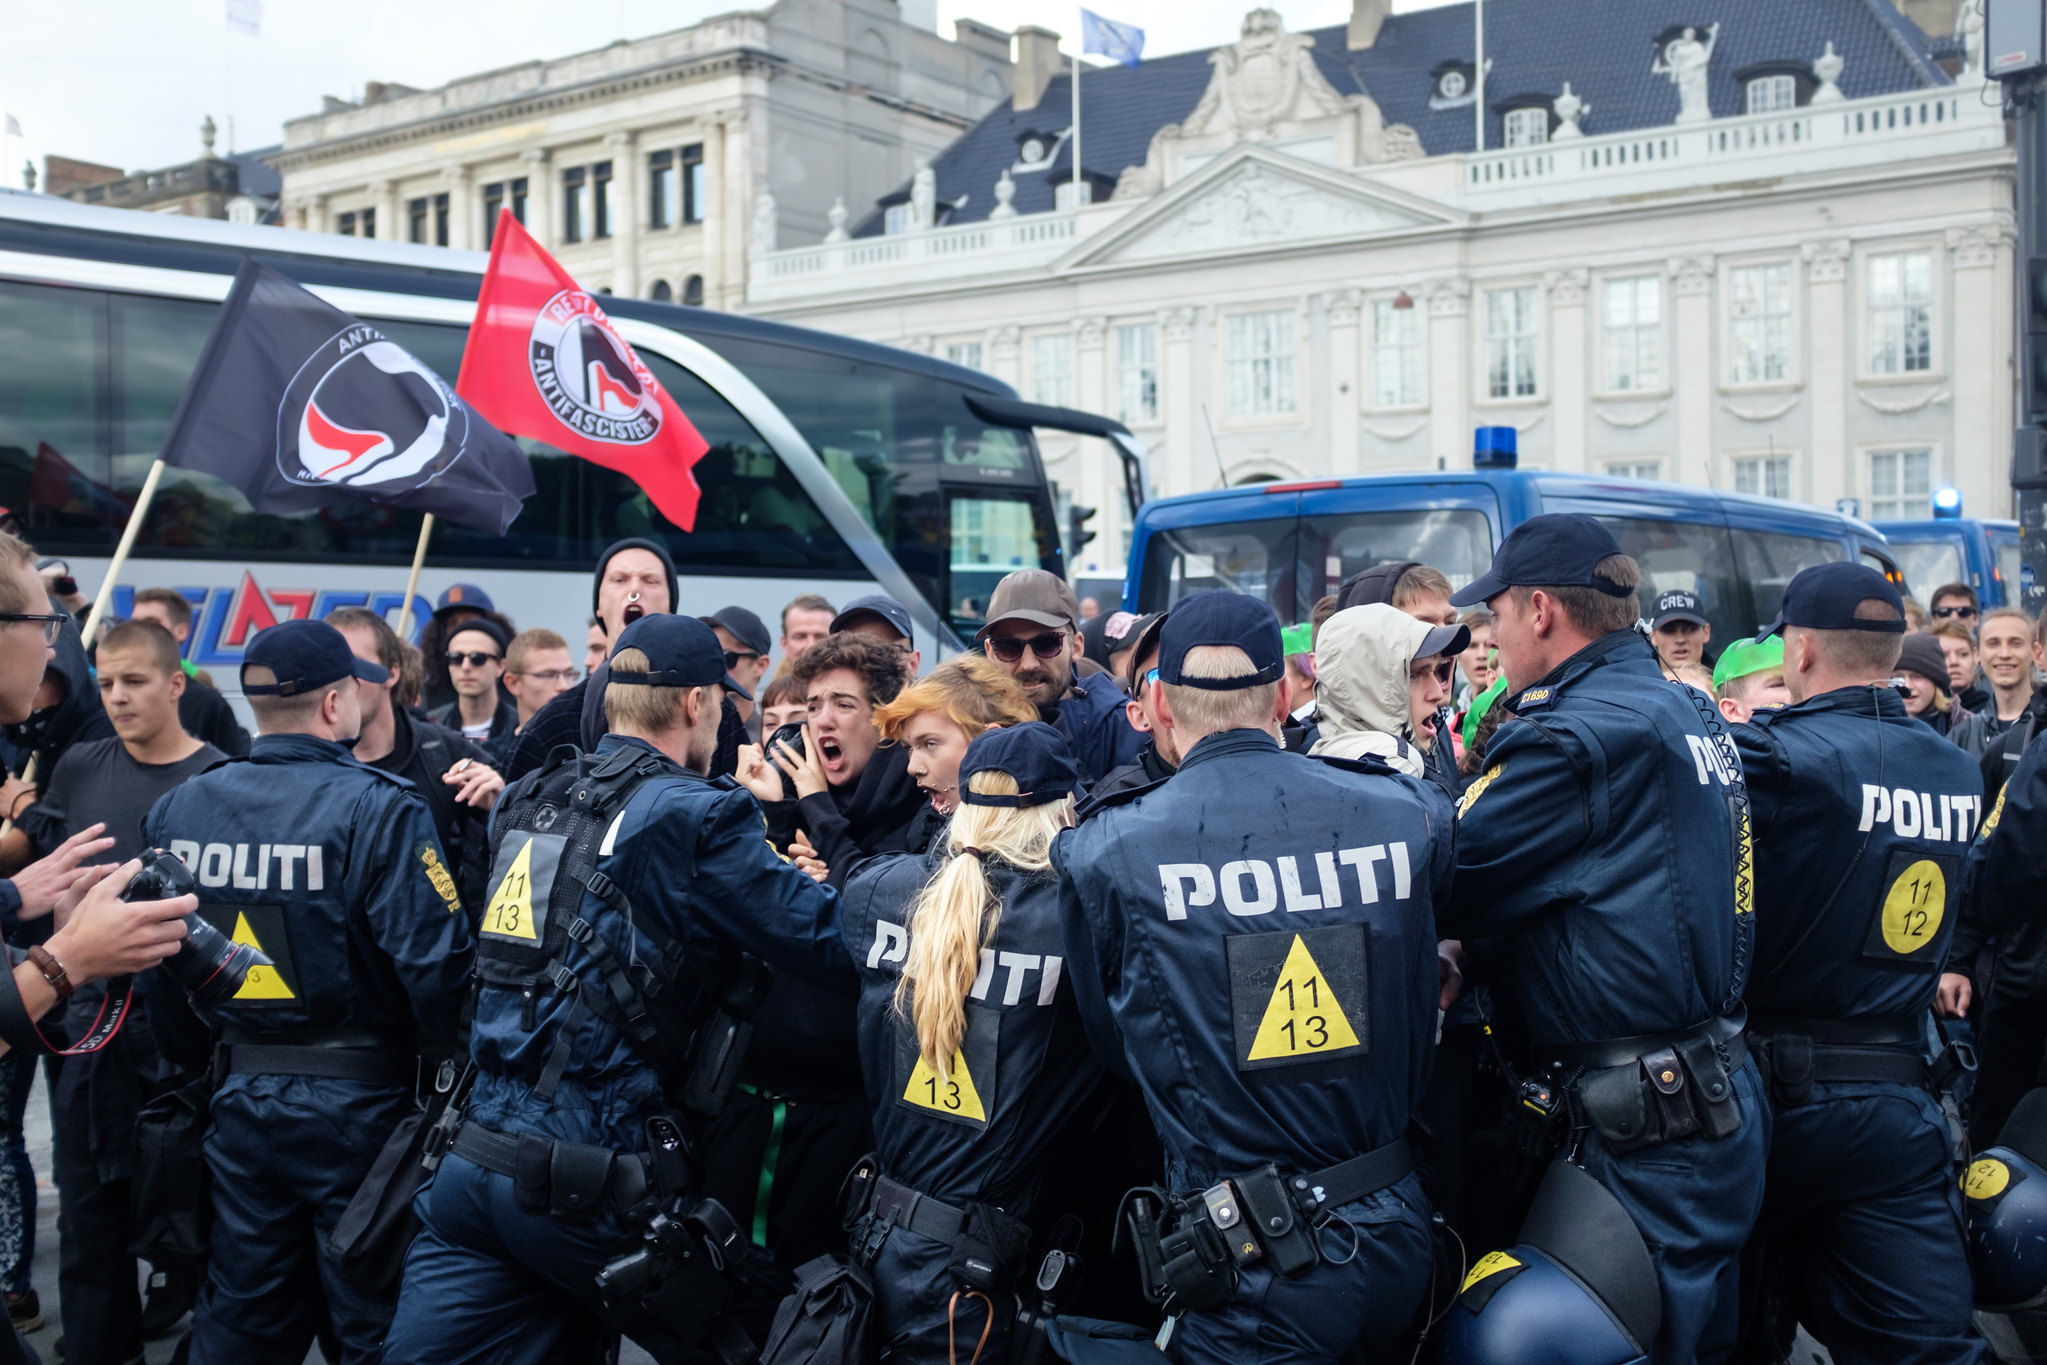 Berlin “trotzt” Coronavirus: Linksradikale mit Demo und Randale gegen Polizisten